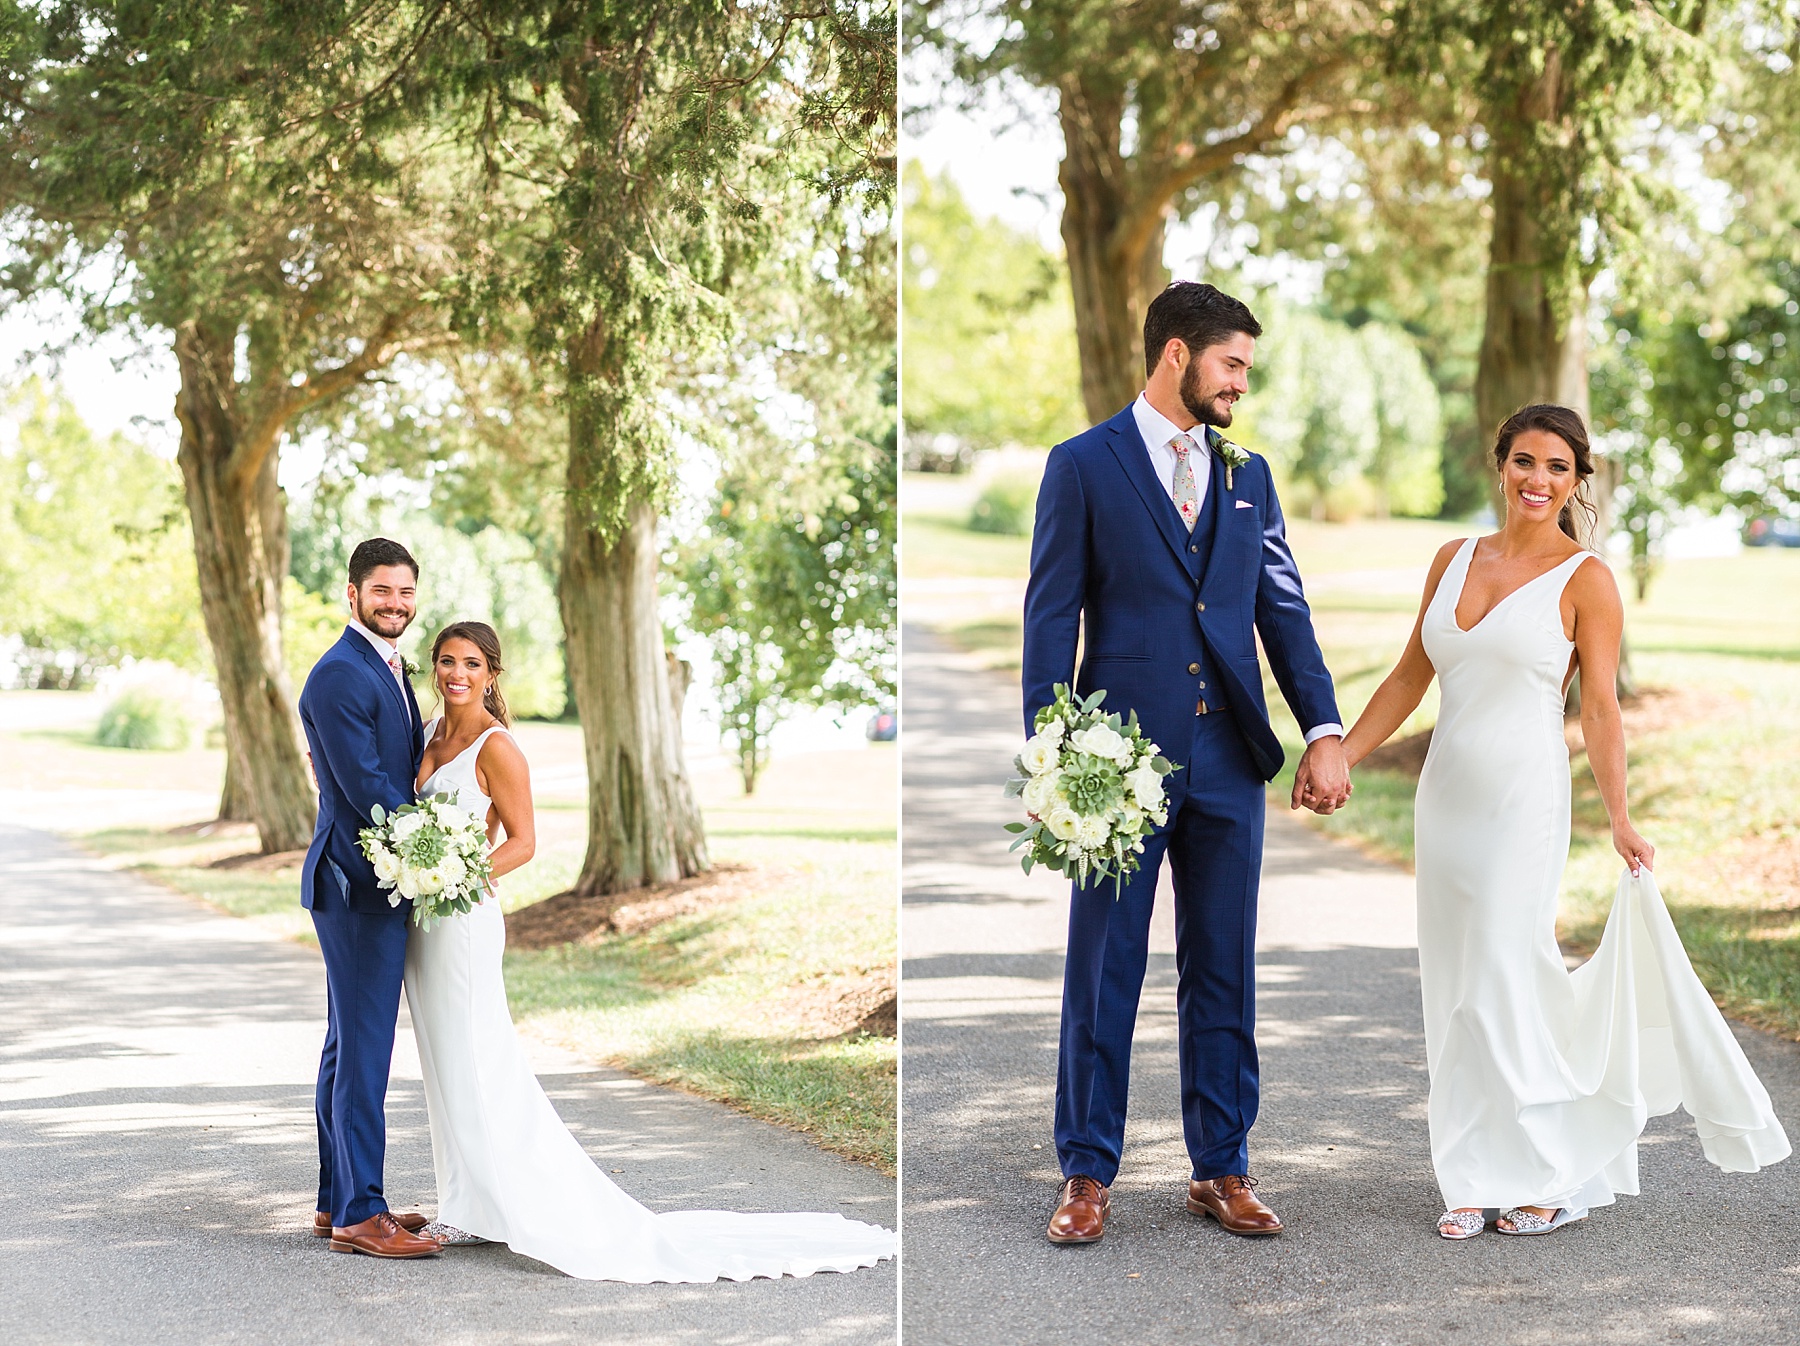 Alexandra Mandato Photography photographs fall wedding day in Maryland 